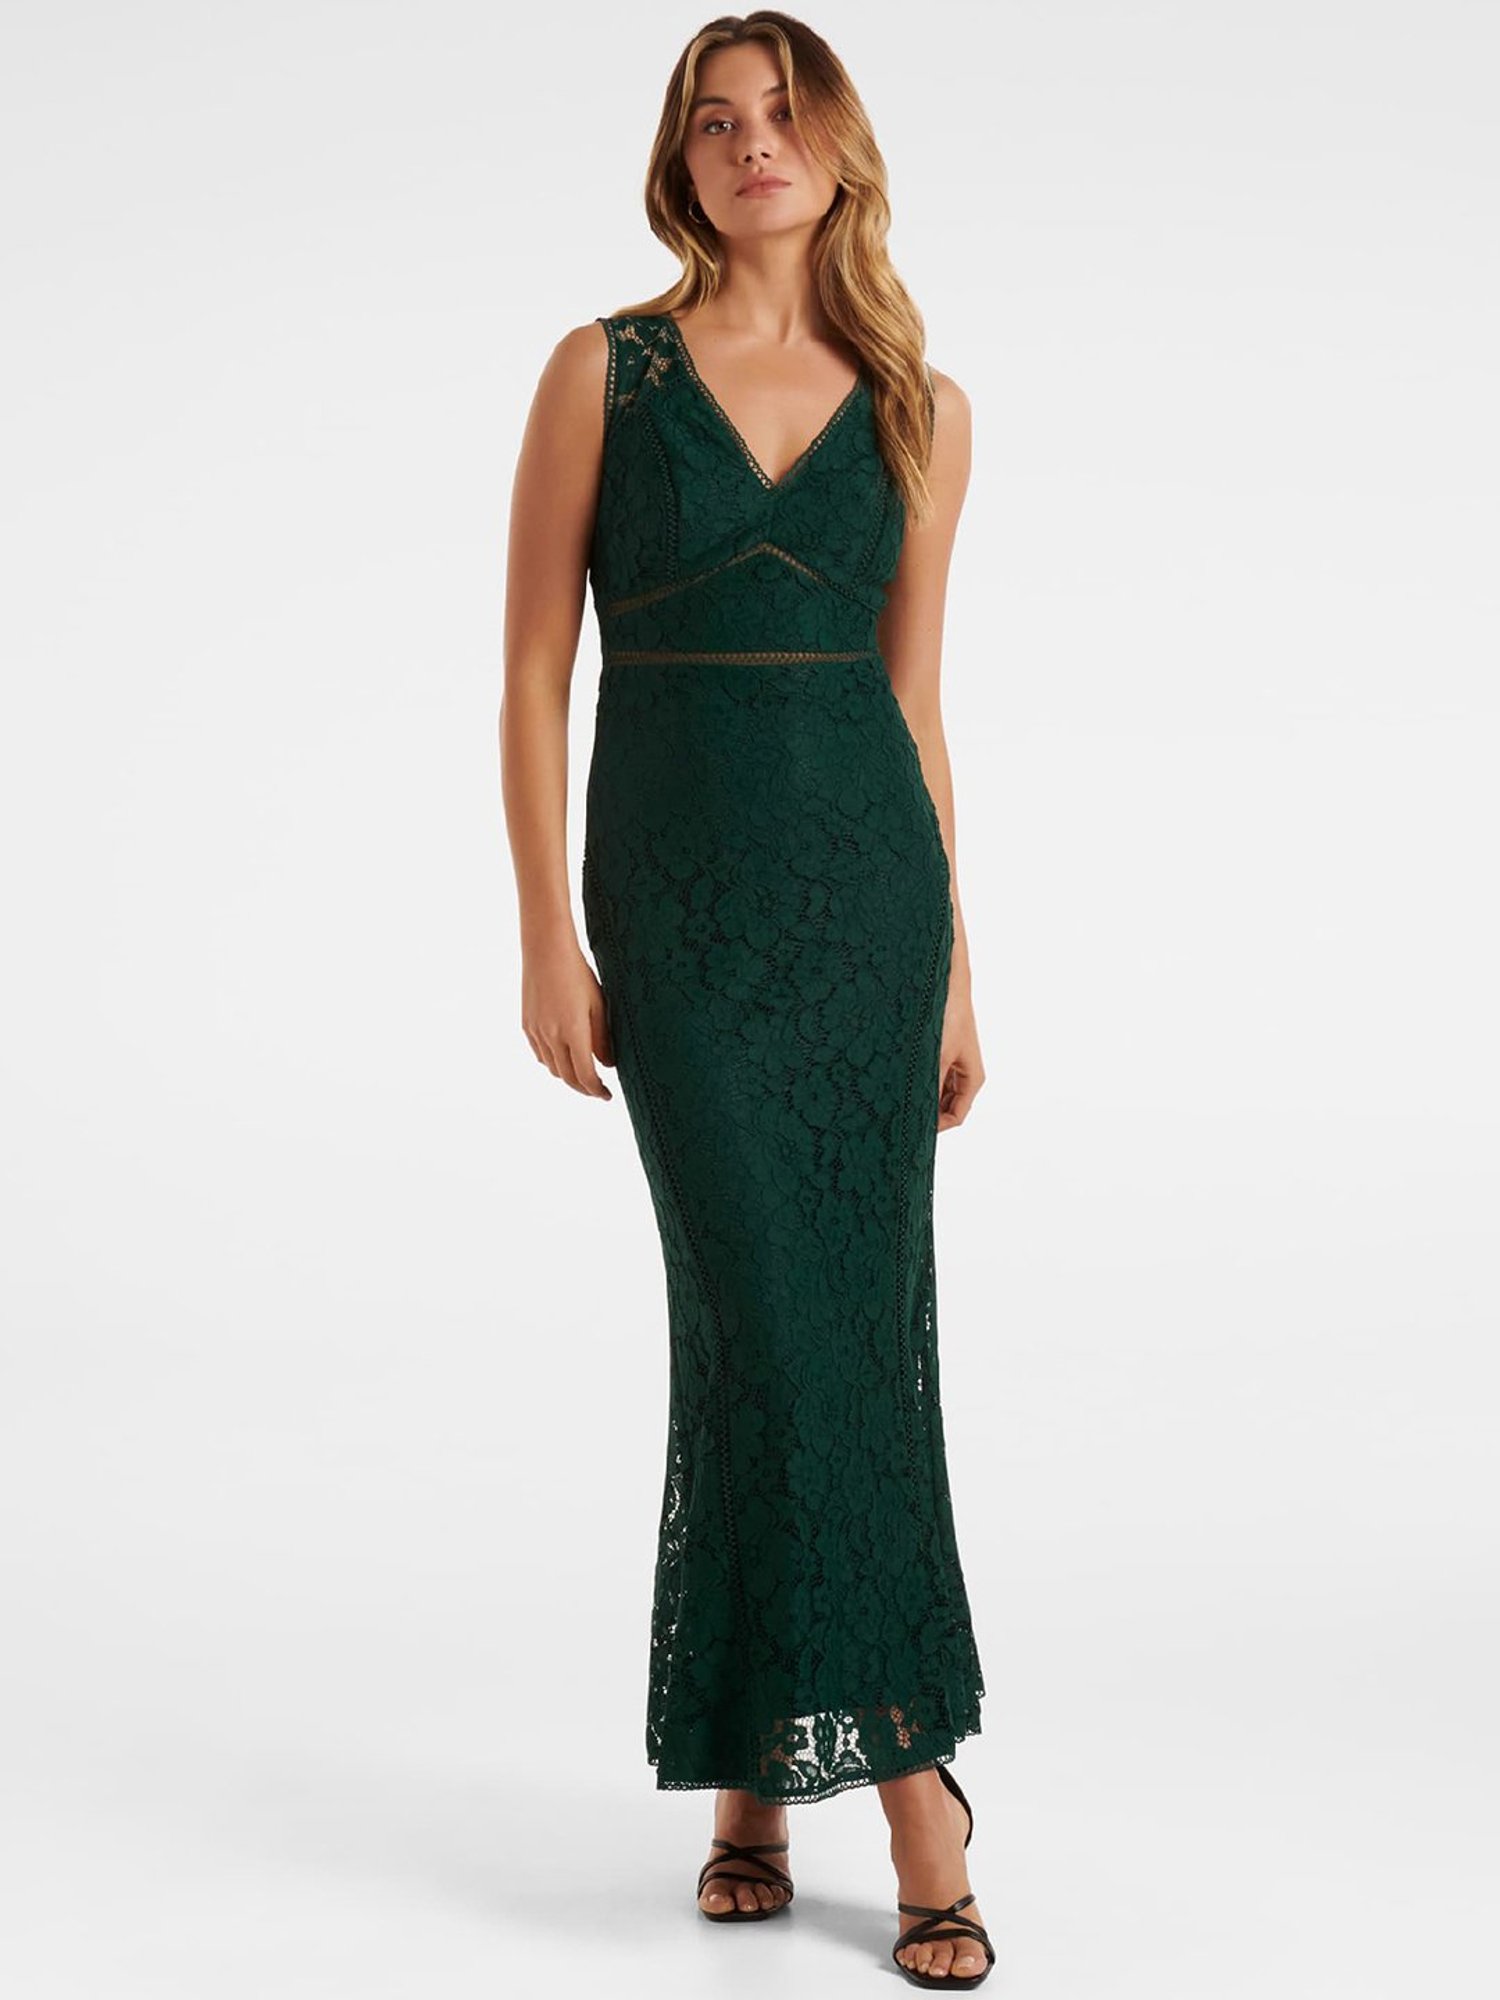 Buy Navy Blue Lace Maxi Dress For Women Online - Zink London